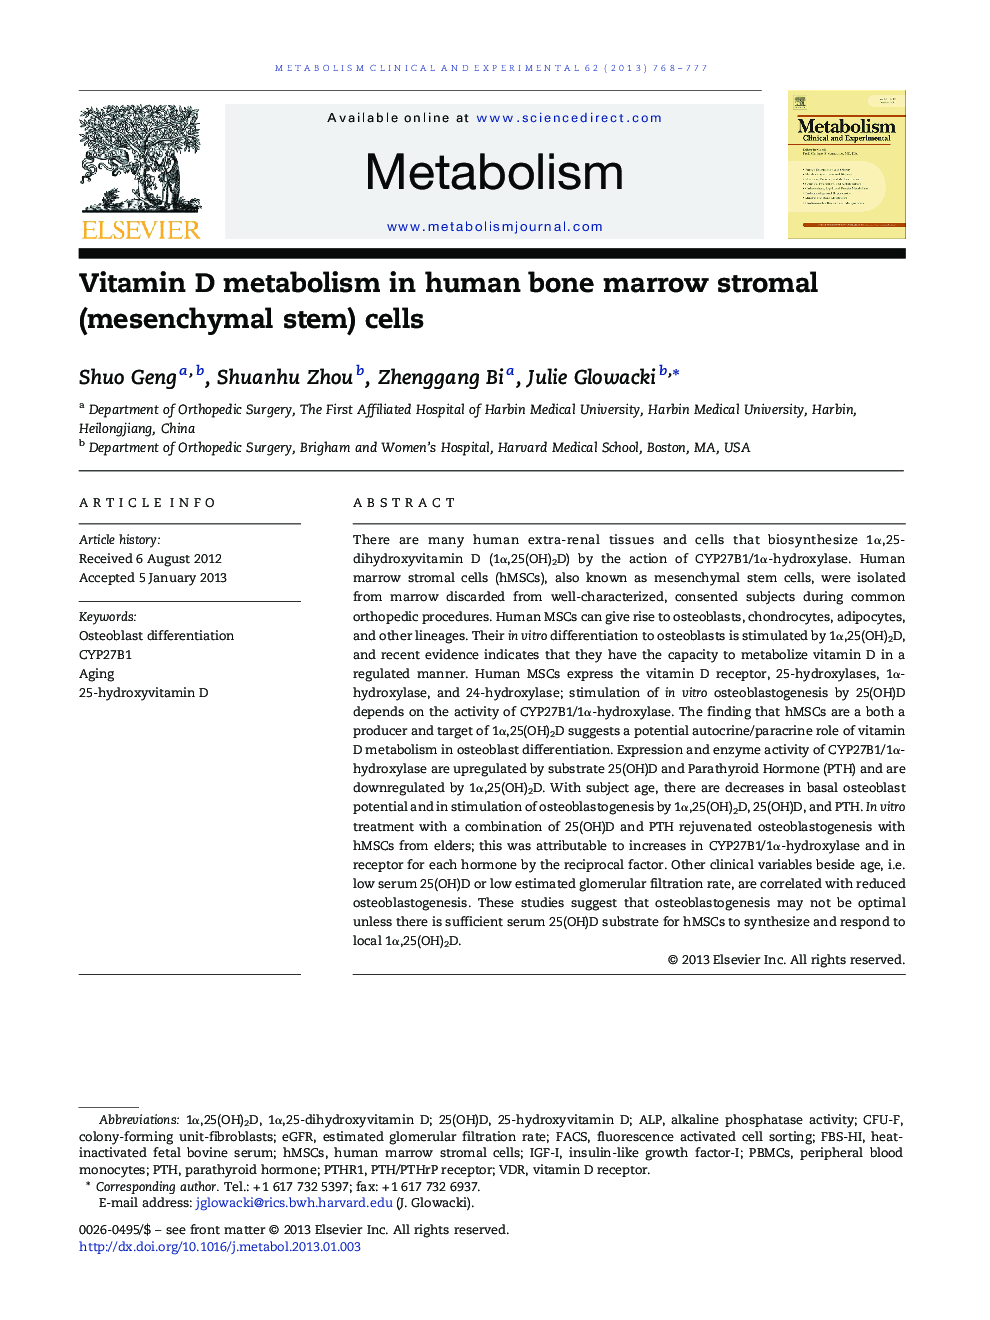 Vitamin D metabolism in human bone marrow stromal (mesenchymal stem) cells